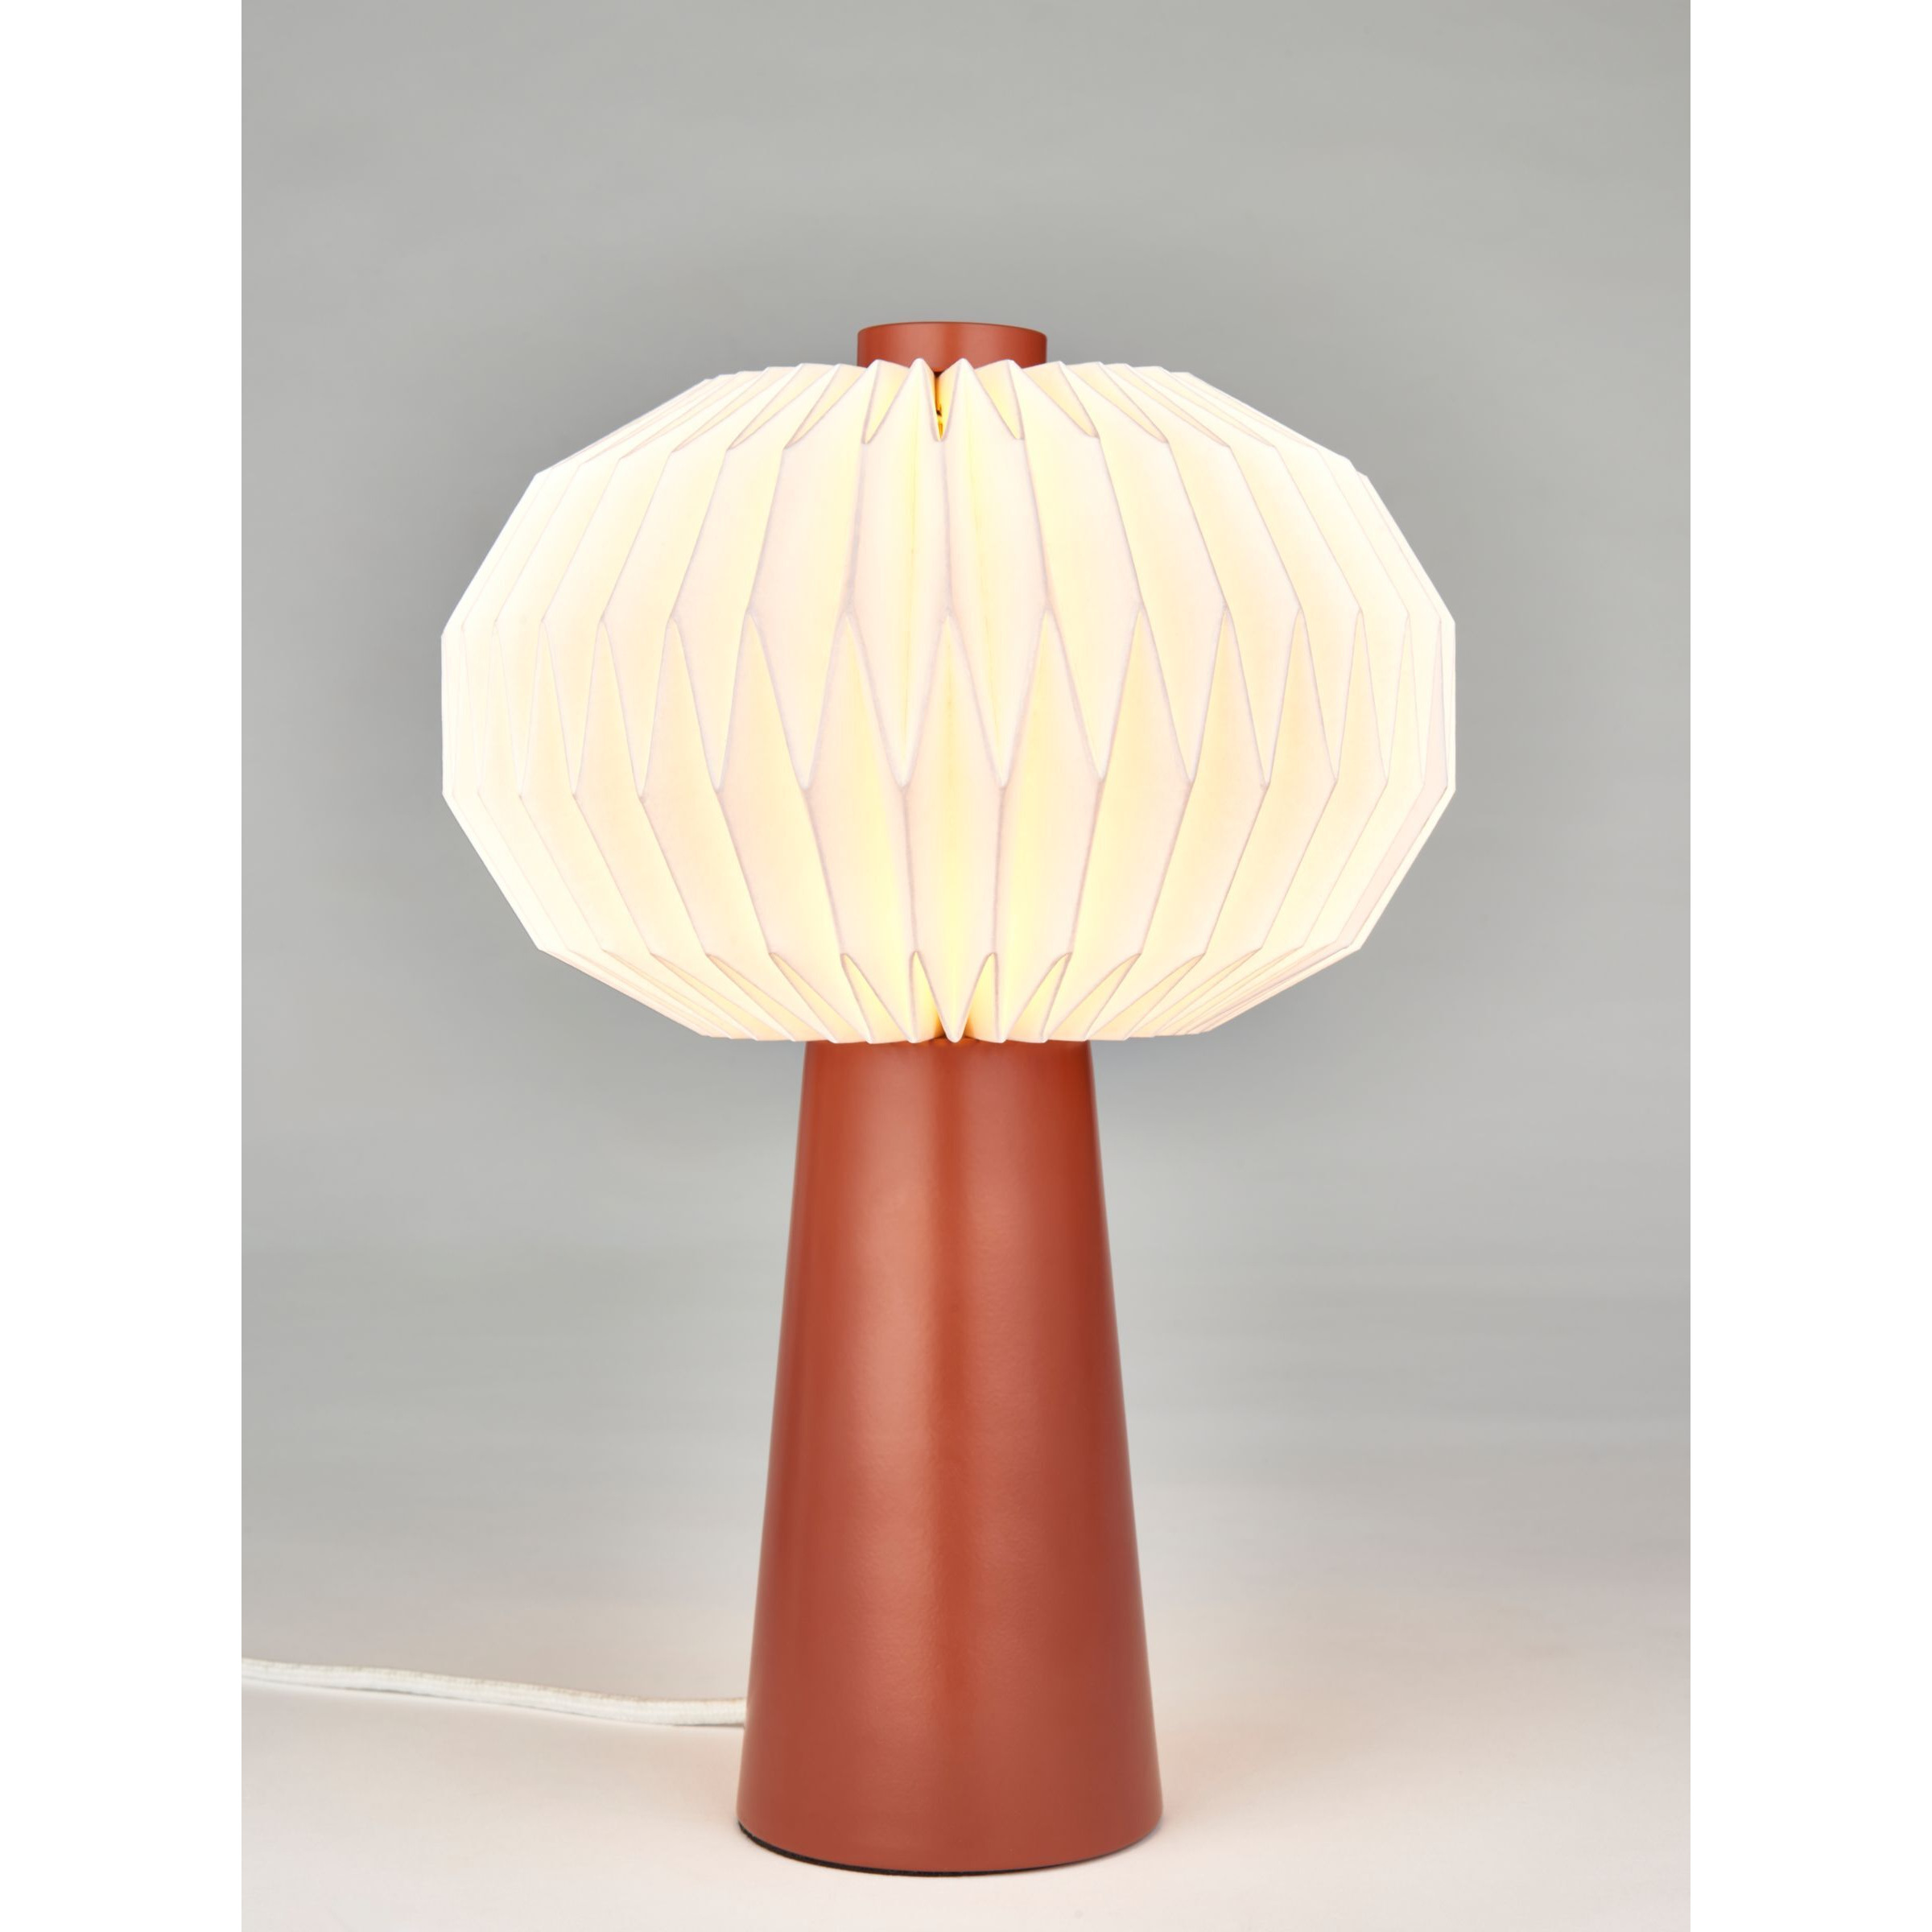 John Lewis Issie Table Lamp - image 1